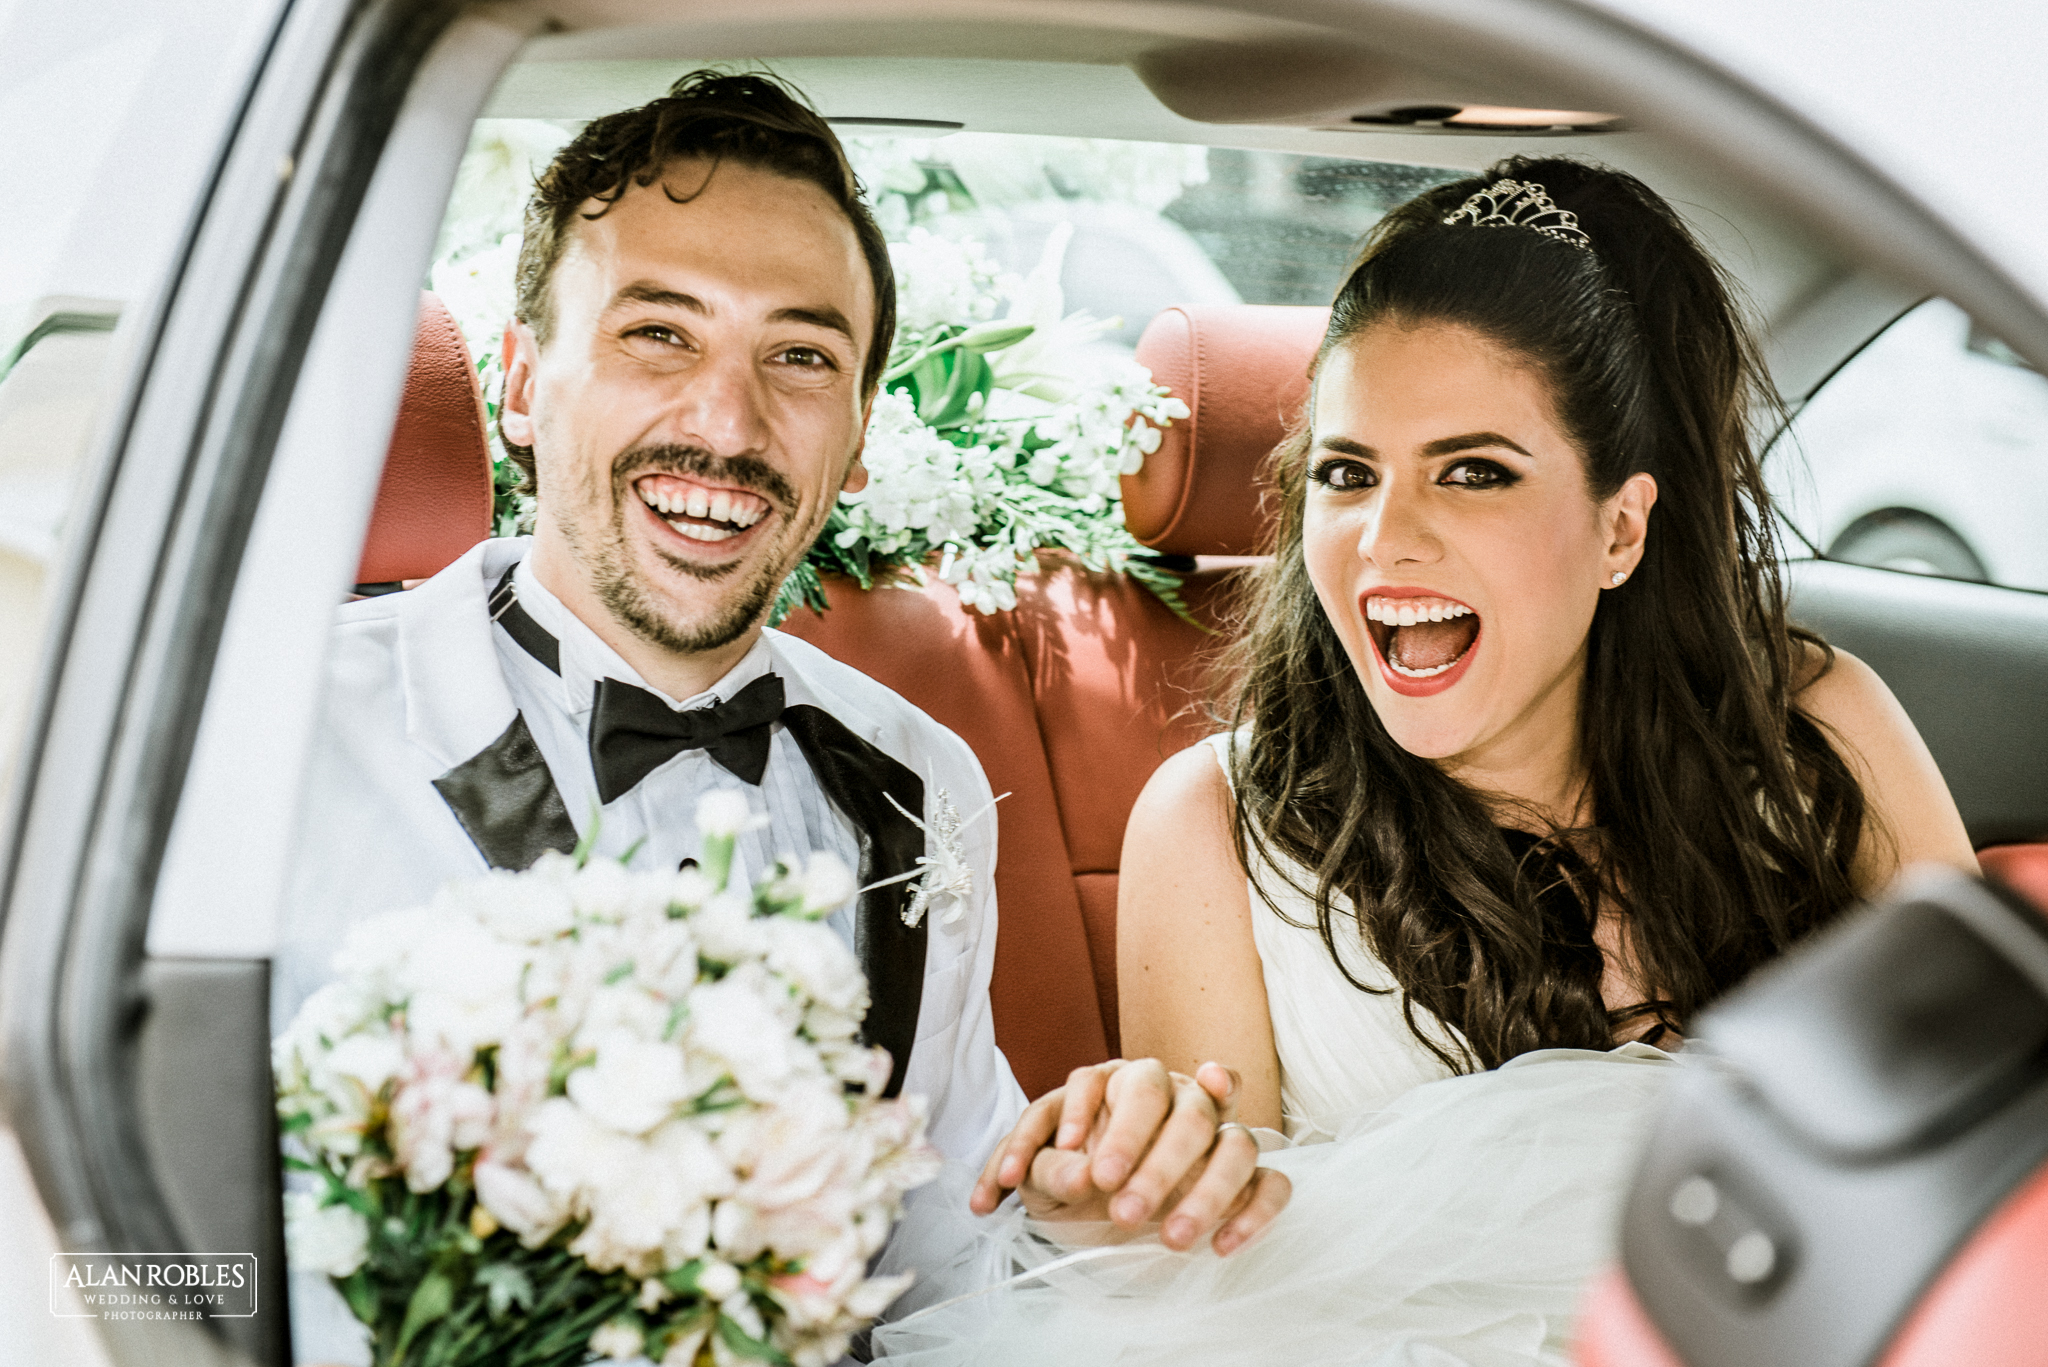 Novios sonriendo dentro del coche de bodas. Fotografia de bodas. Fotografo Alan Robles. Los mejores momentos de boda.